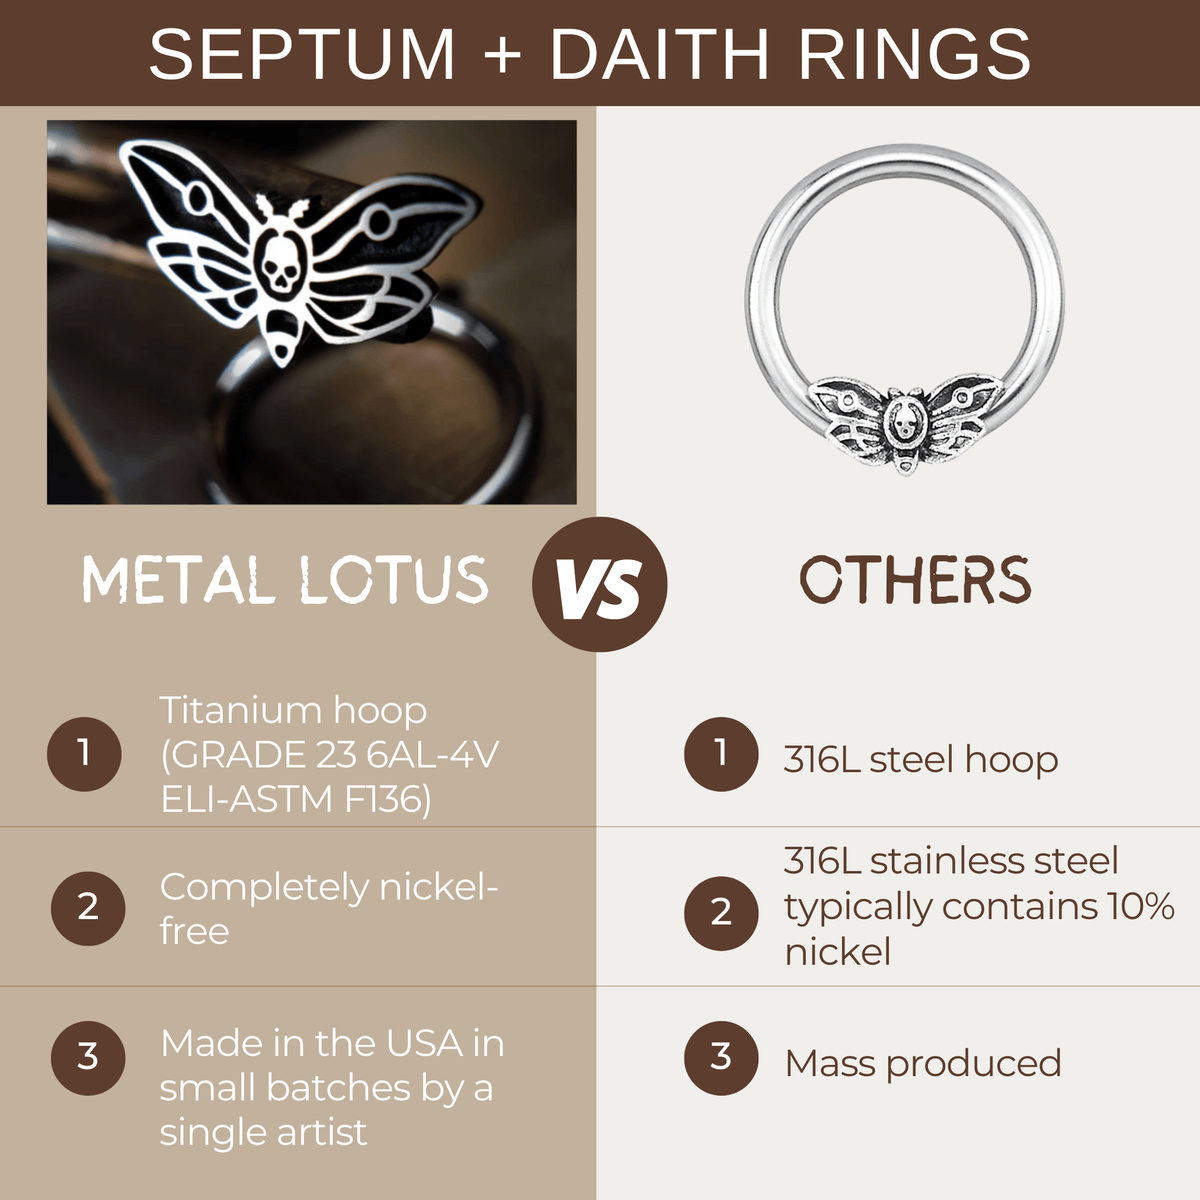 Cat Skull with Wings Septum + Daith Ring - Metal Lotus